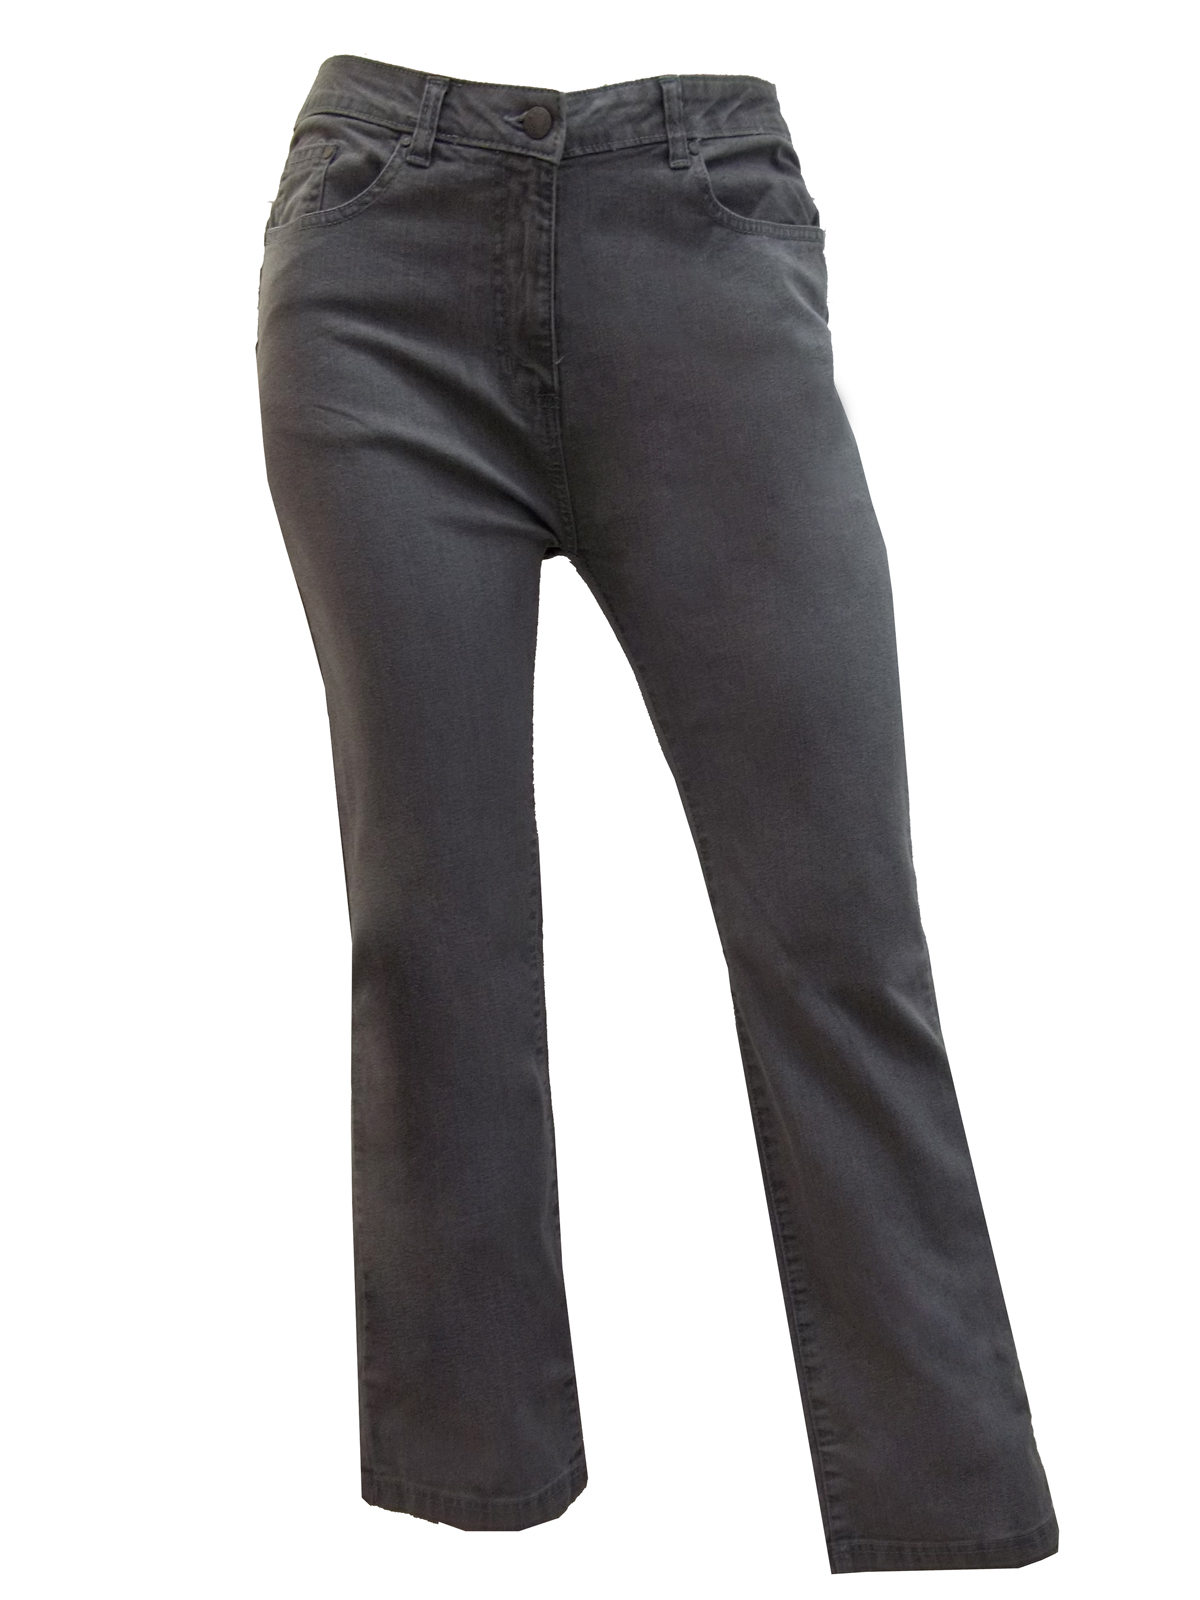 GREY Cotton Rich Sculpt Slim Bootleg Jeans - Size 10 to 26